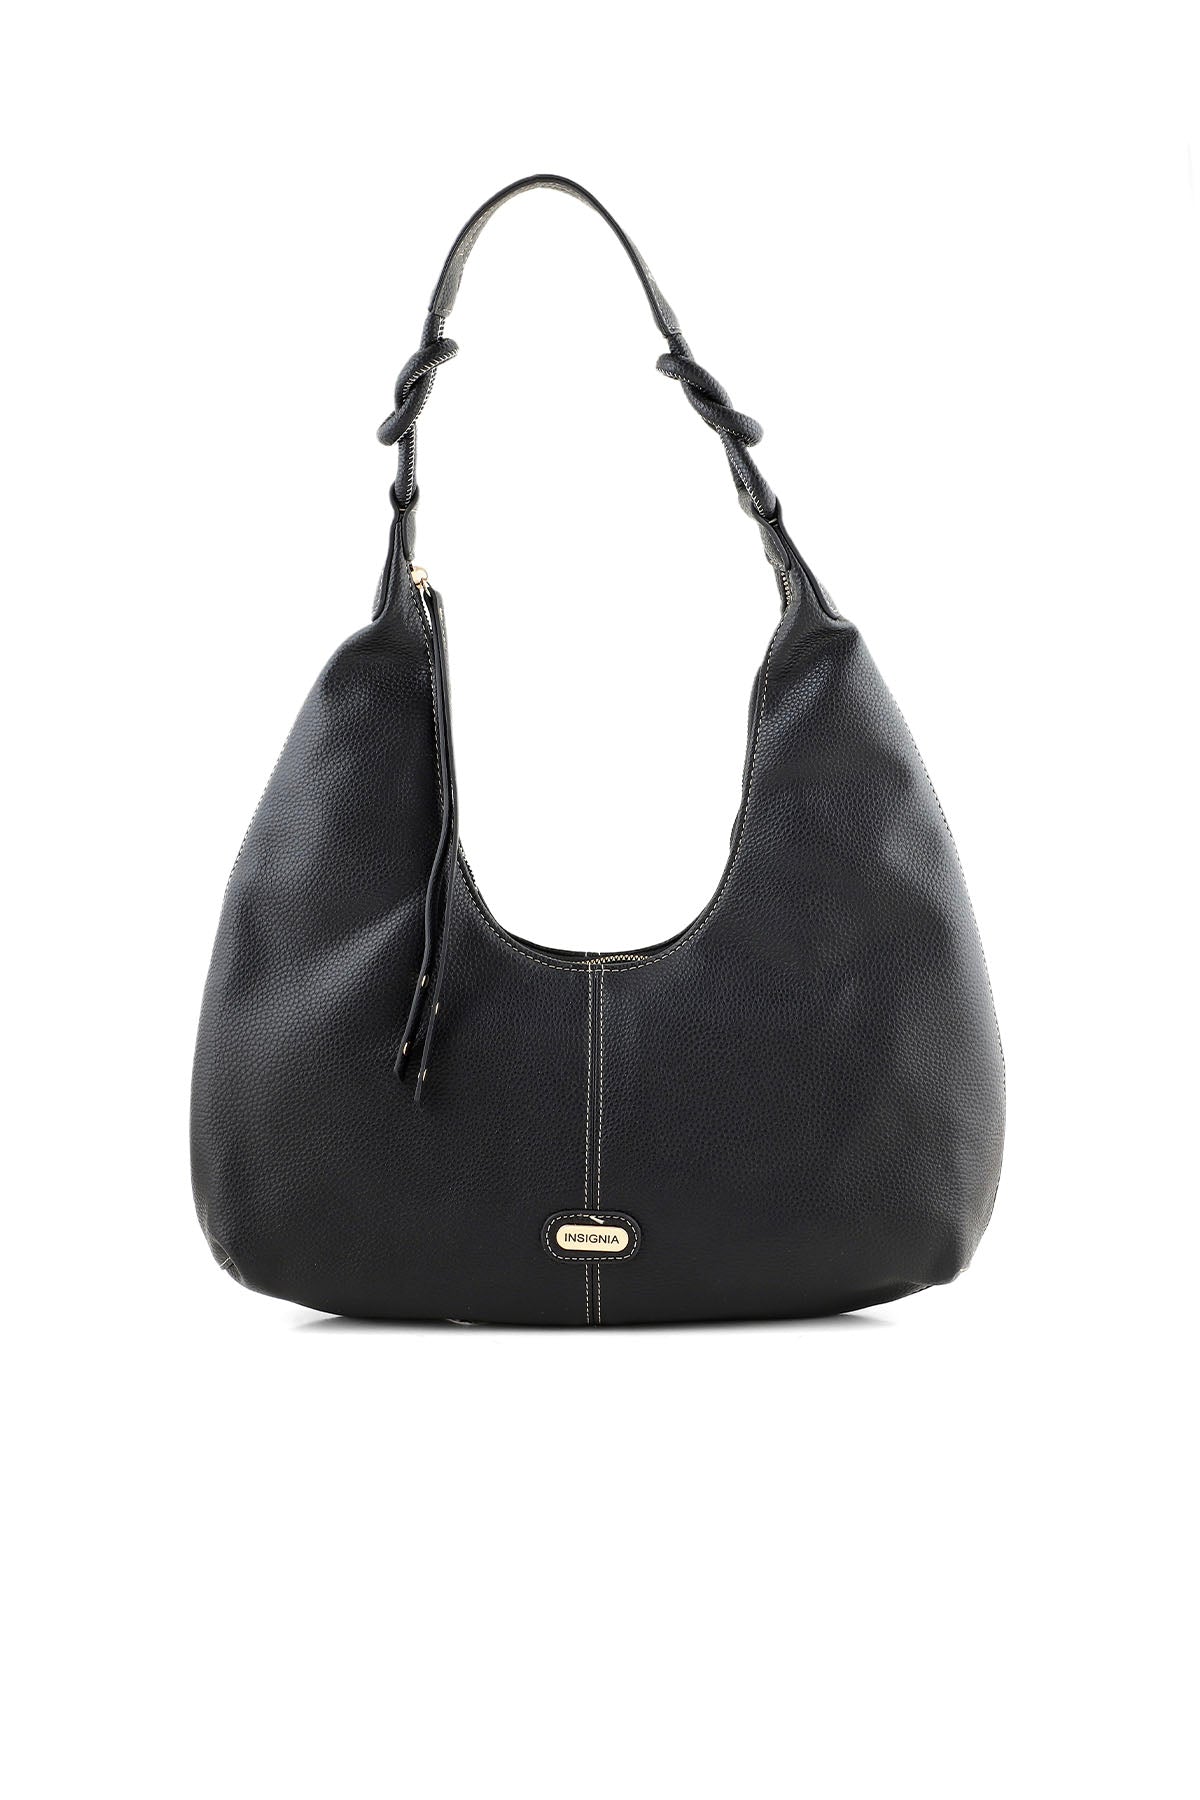 Hobo Hand Bags B15022-Black